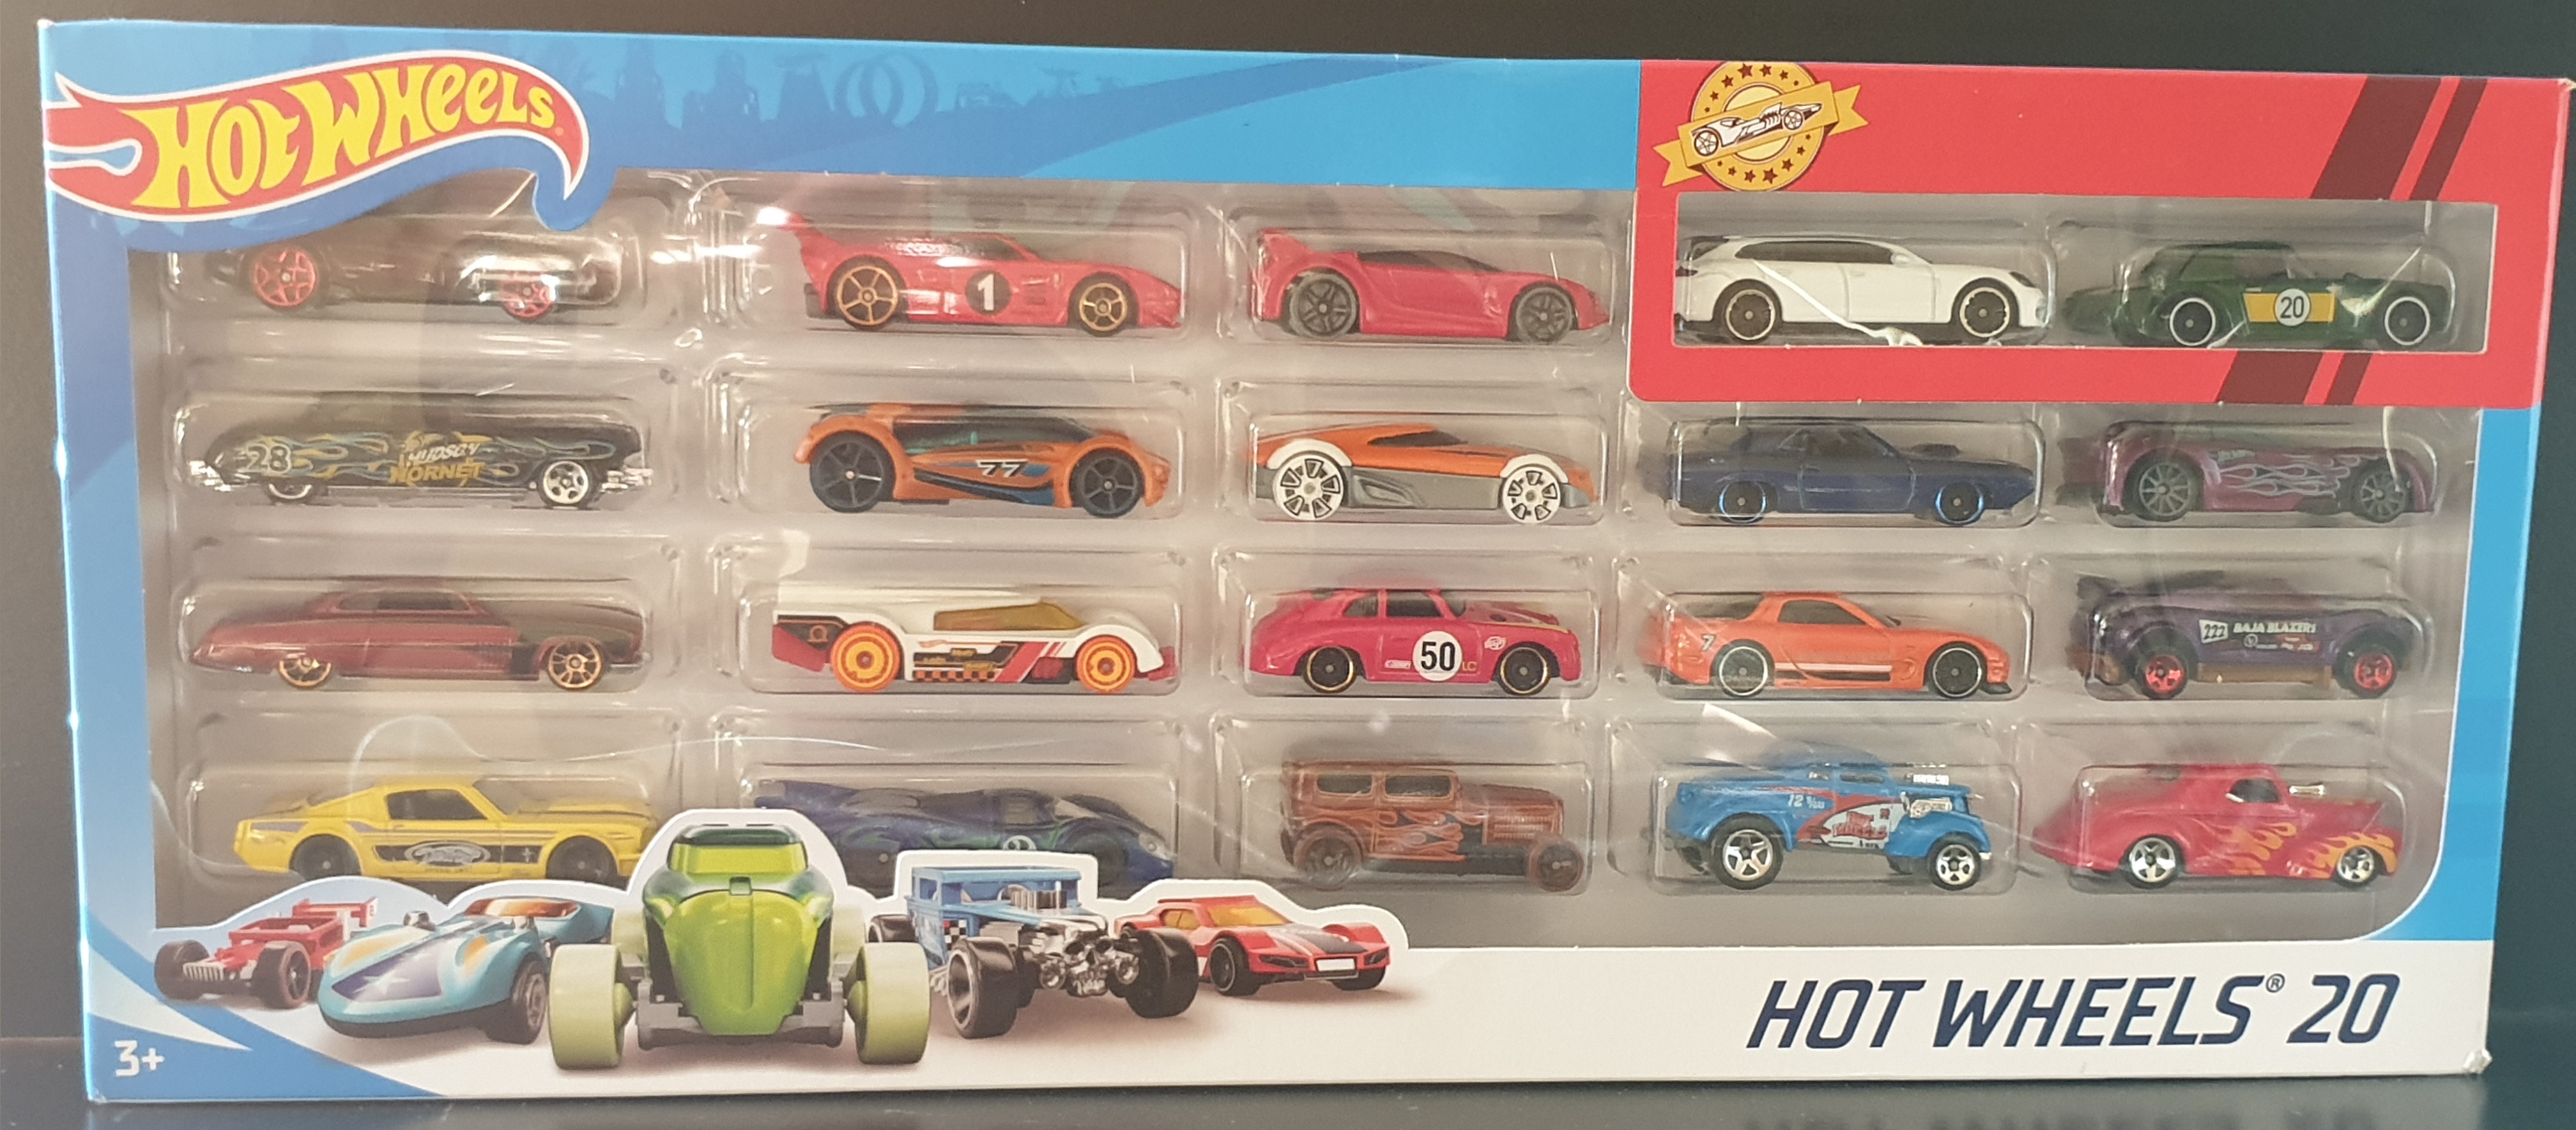 Hot Wheels Hot Wheels Gift Pack 9 Car Assortment Box - Mud Puddle Toys